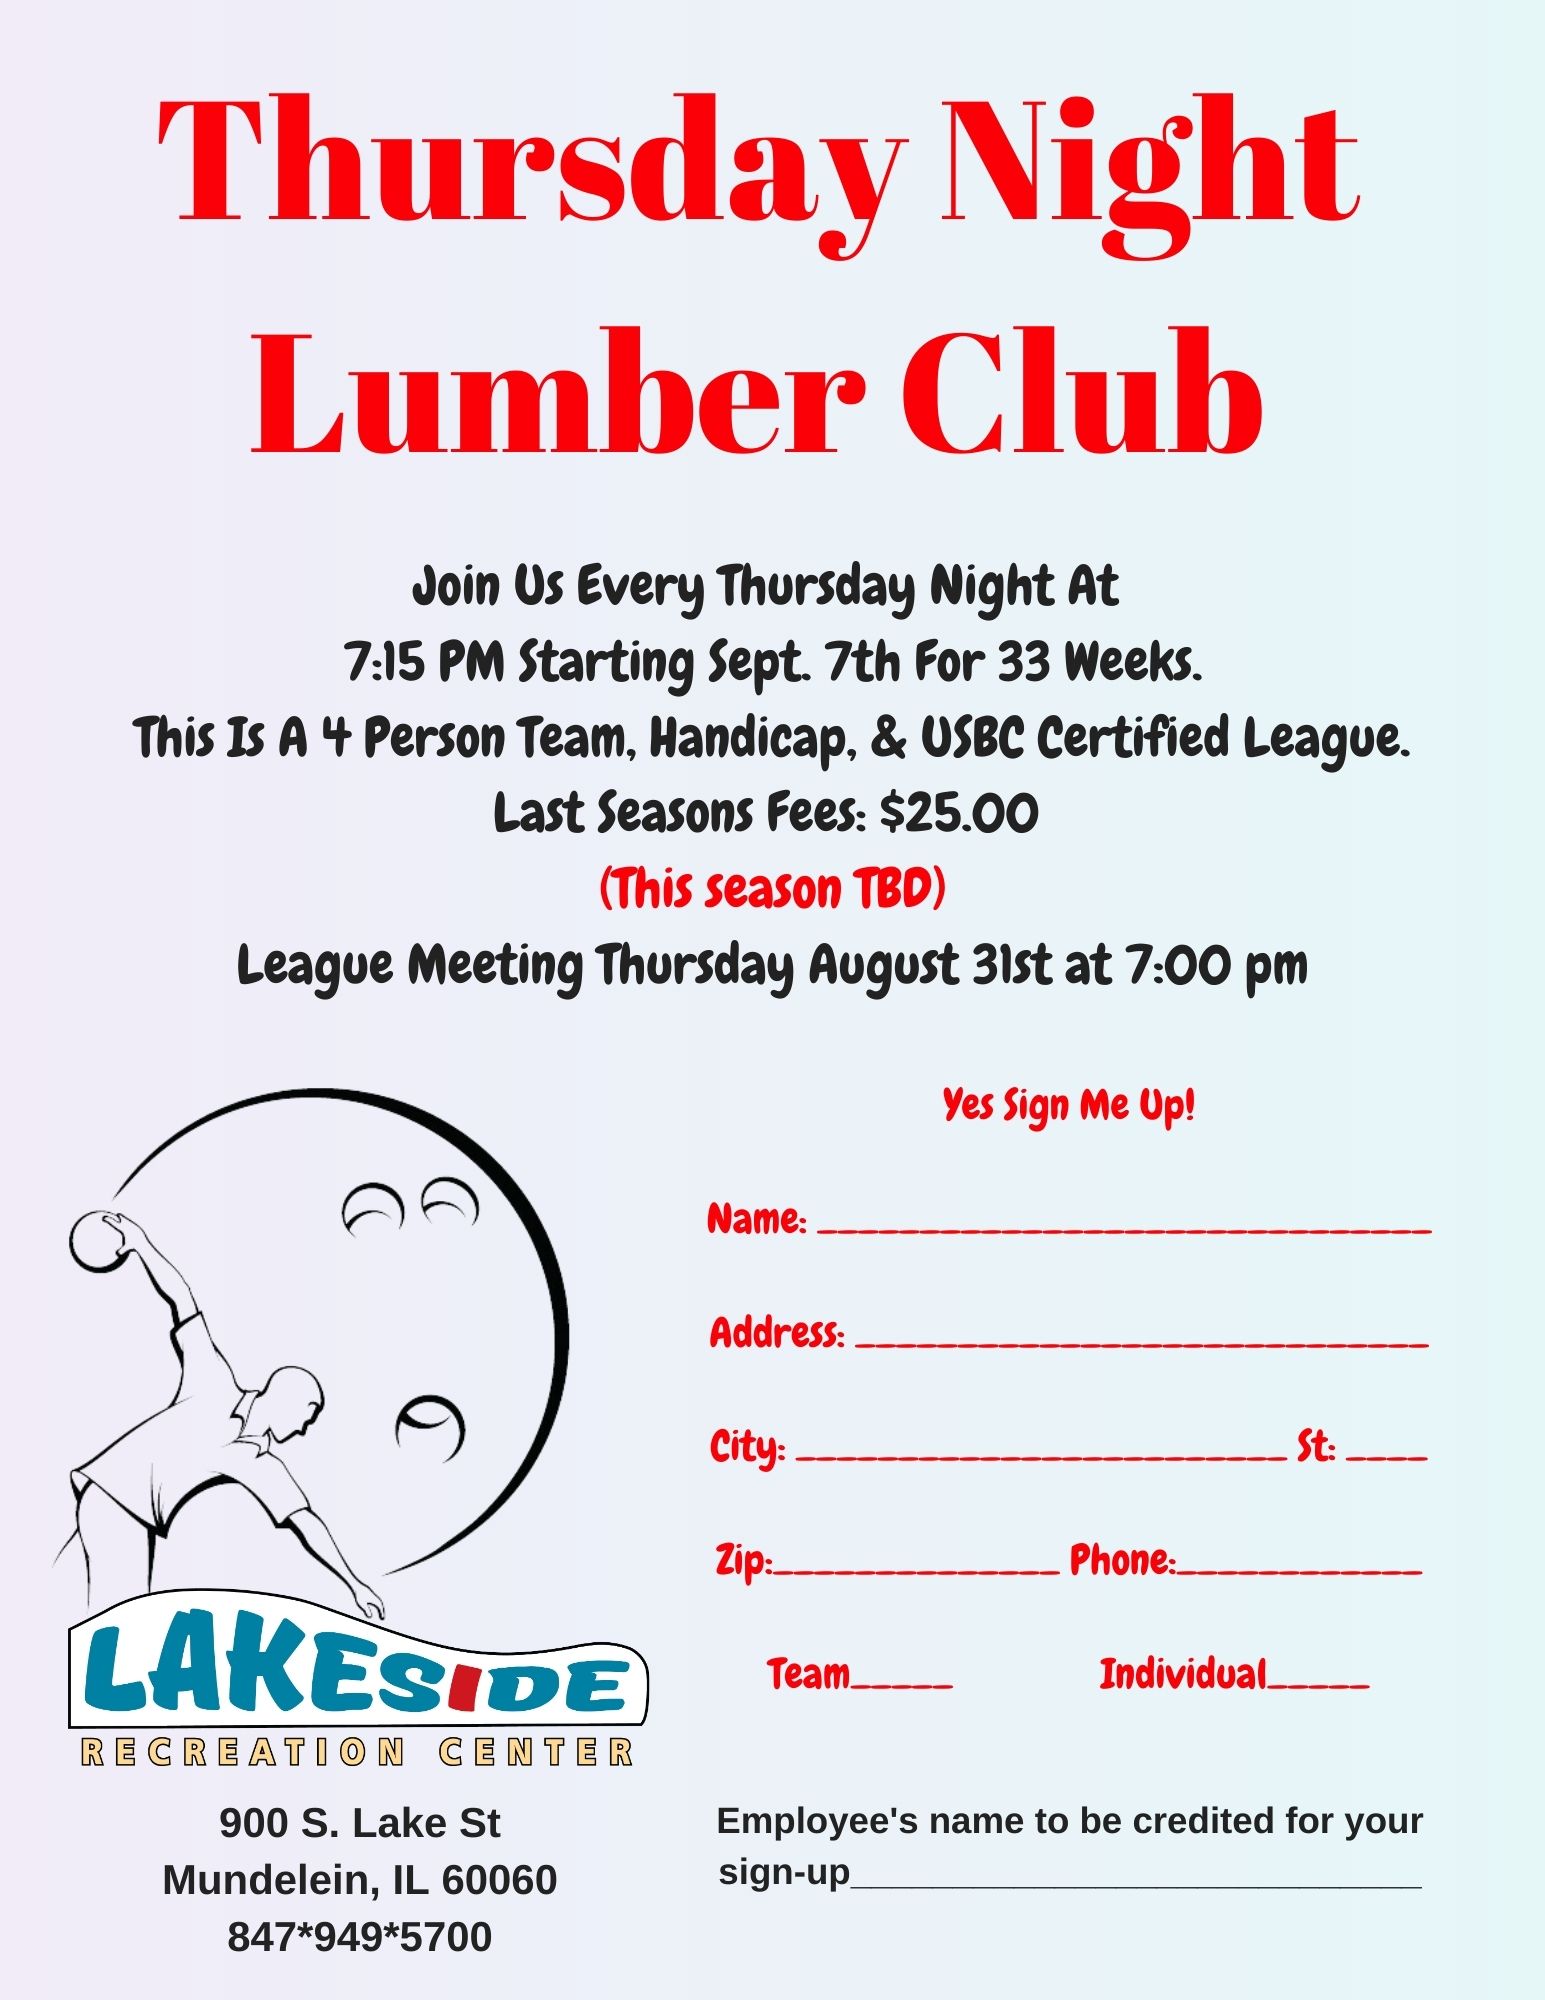 Lumber Club League bowls Thursday Evenings at Lakeside Recreation Center